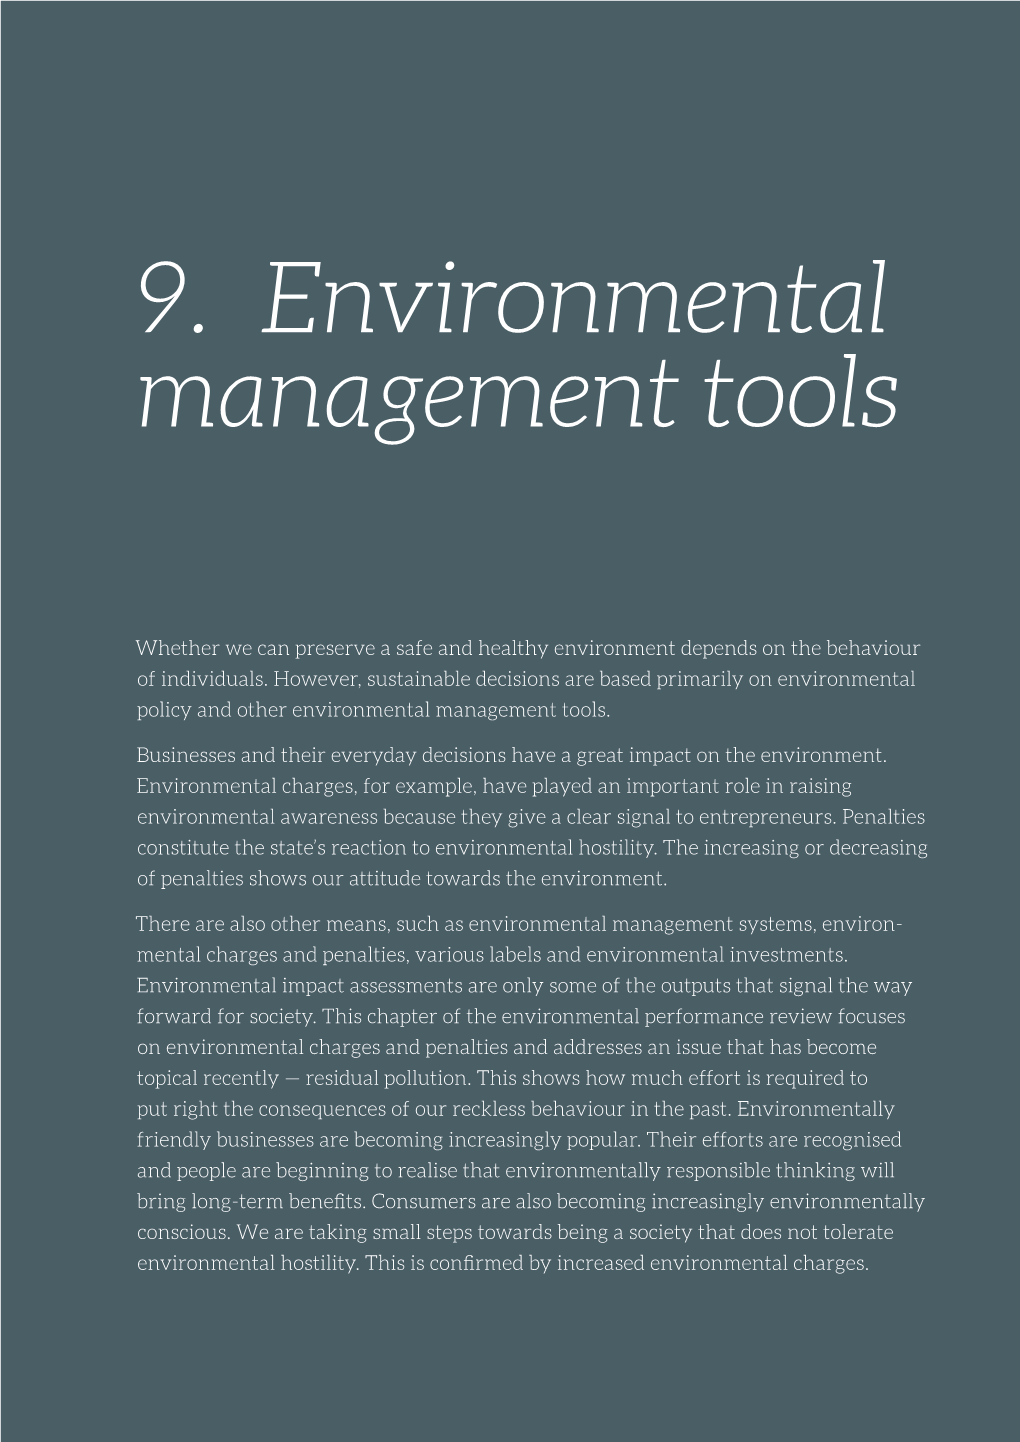 9. Environmental Management Tools